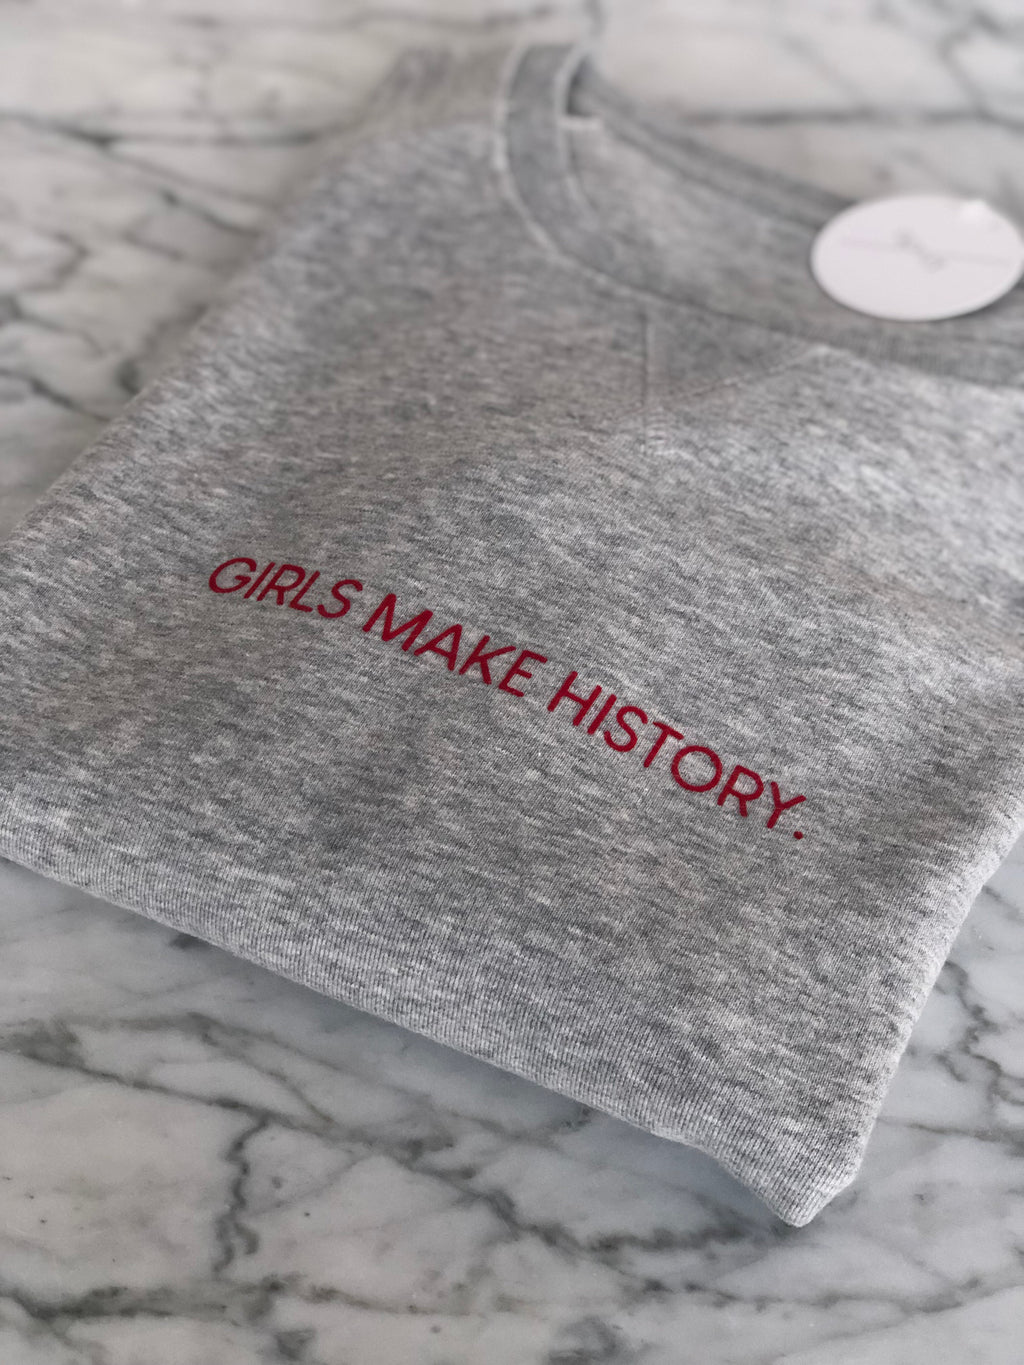 Girls make history.